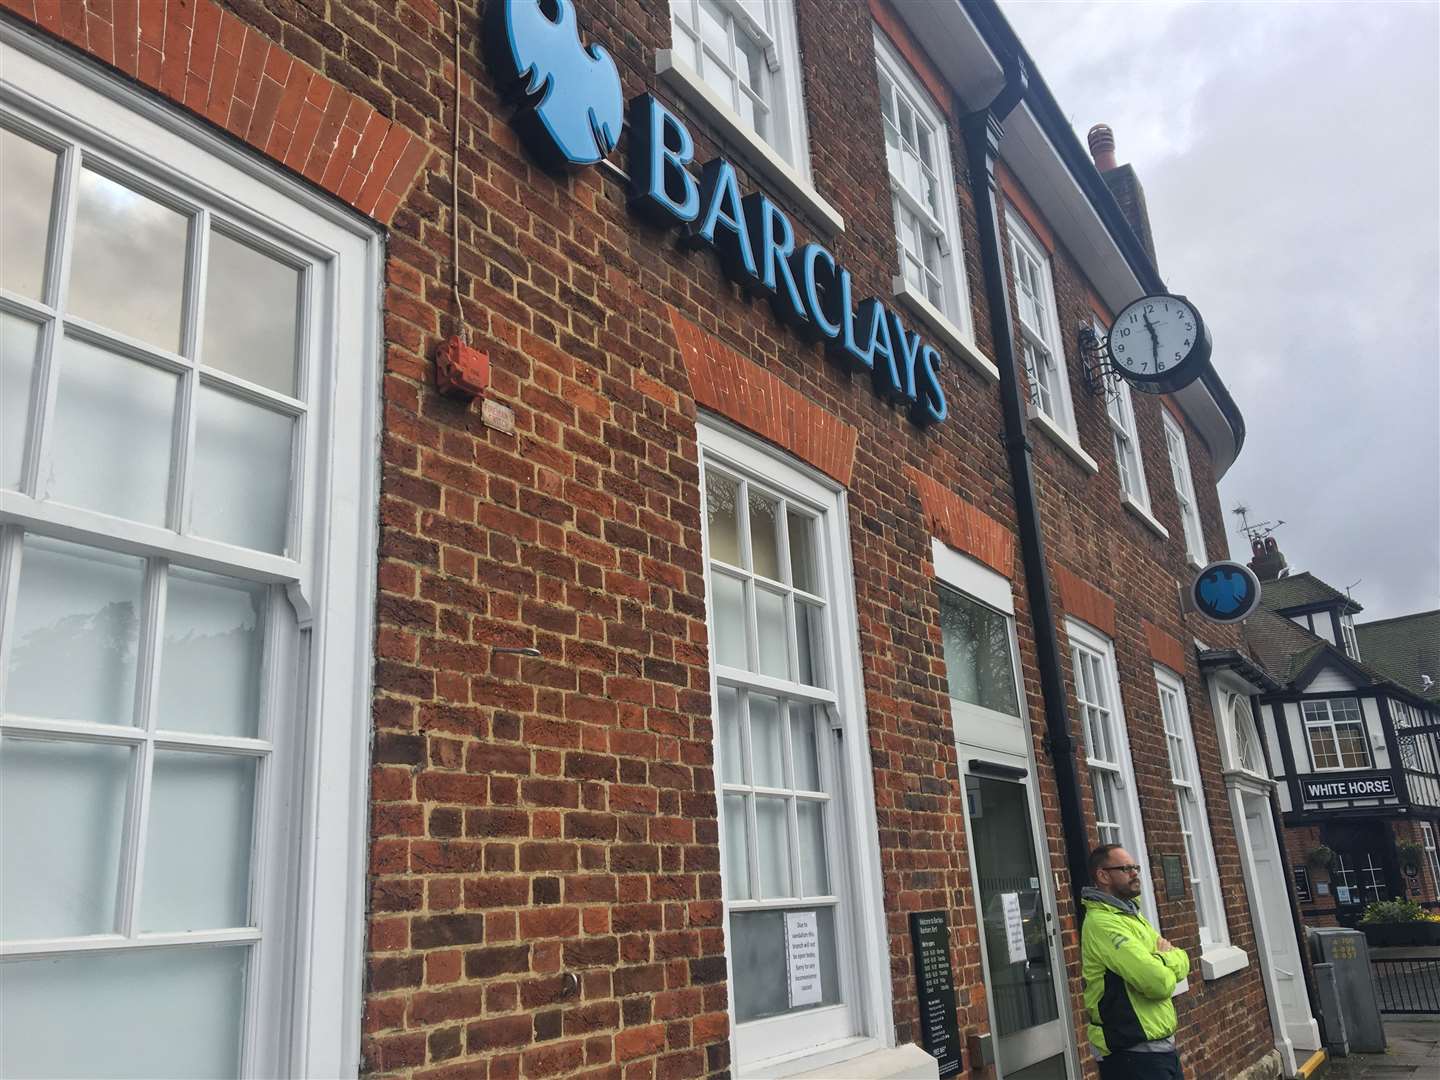 Barclays in High Street, Rainham